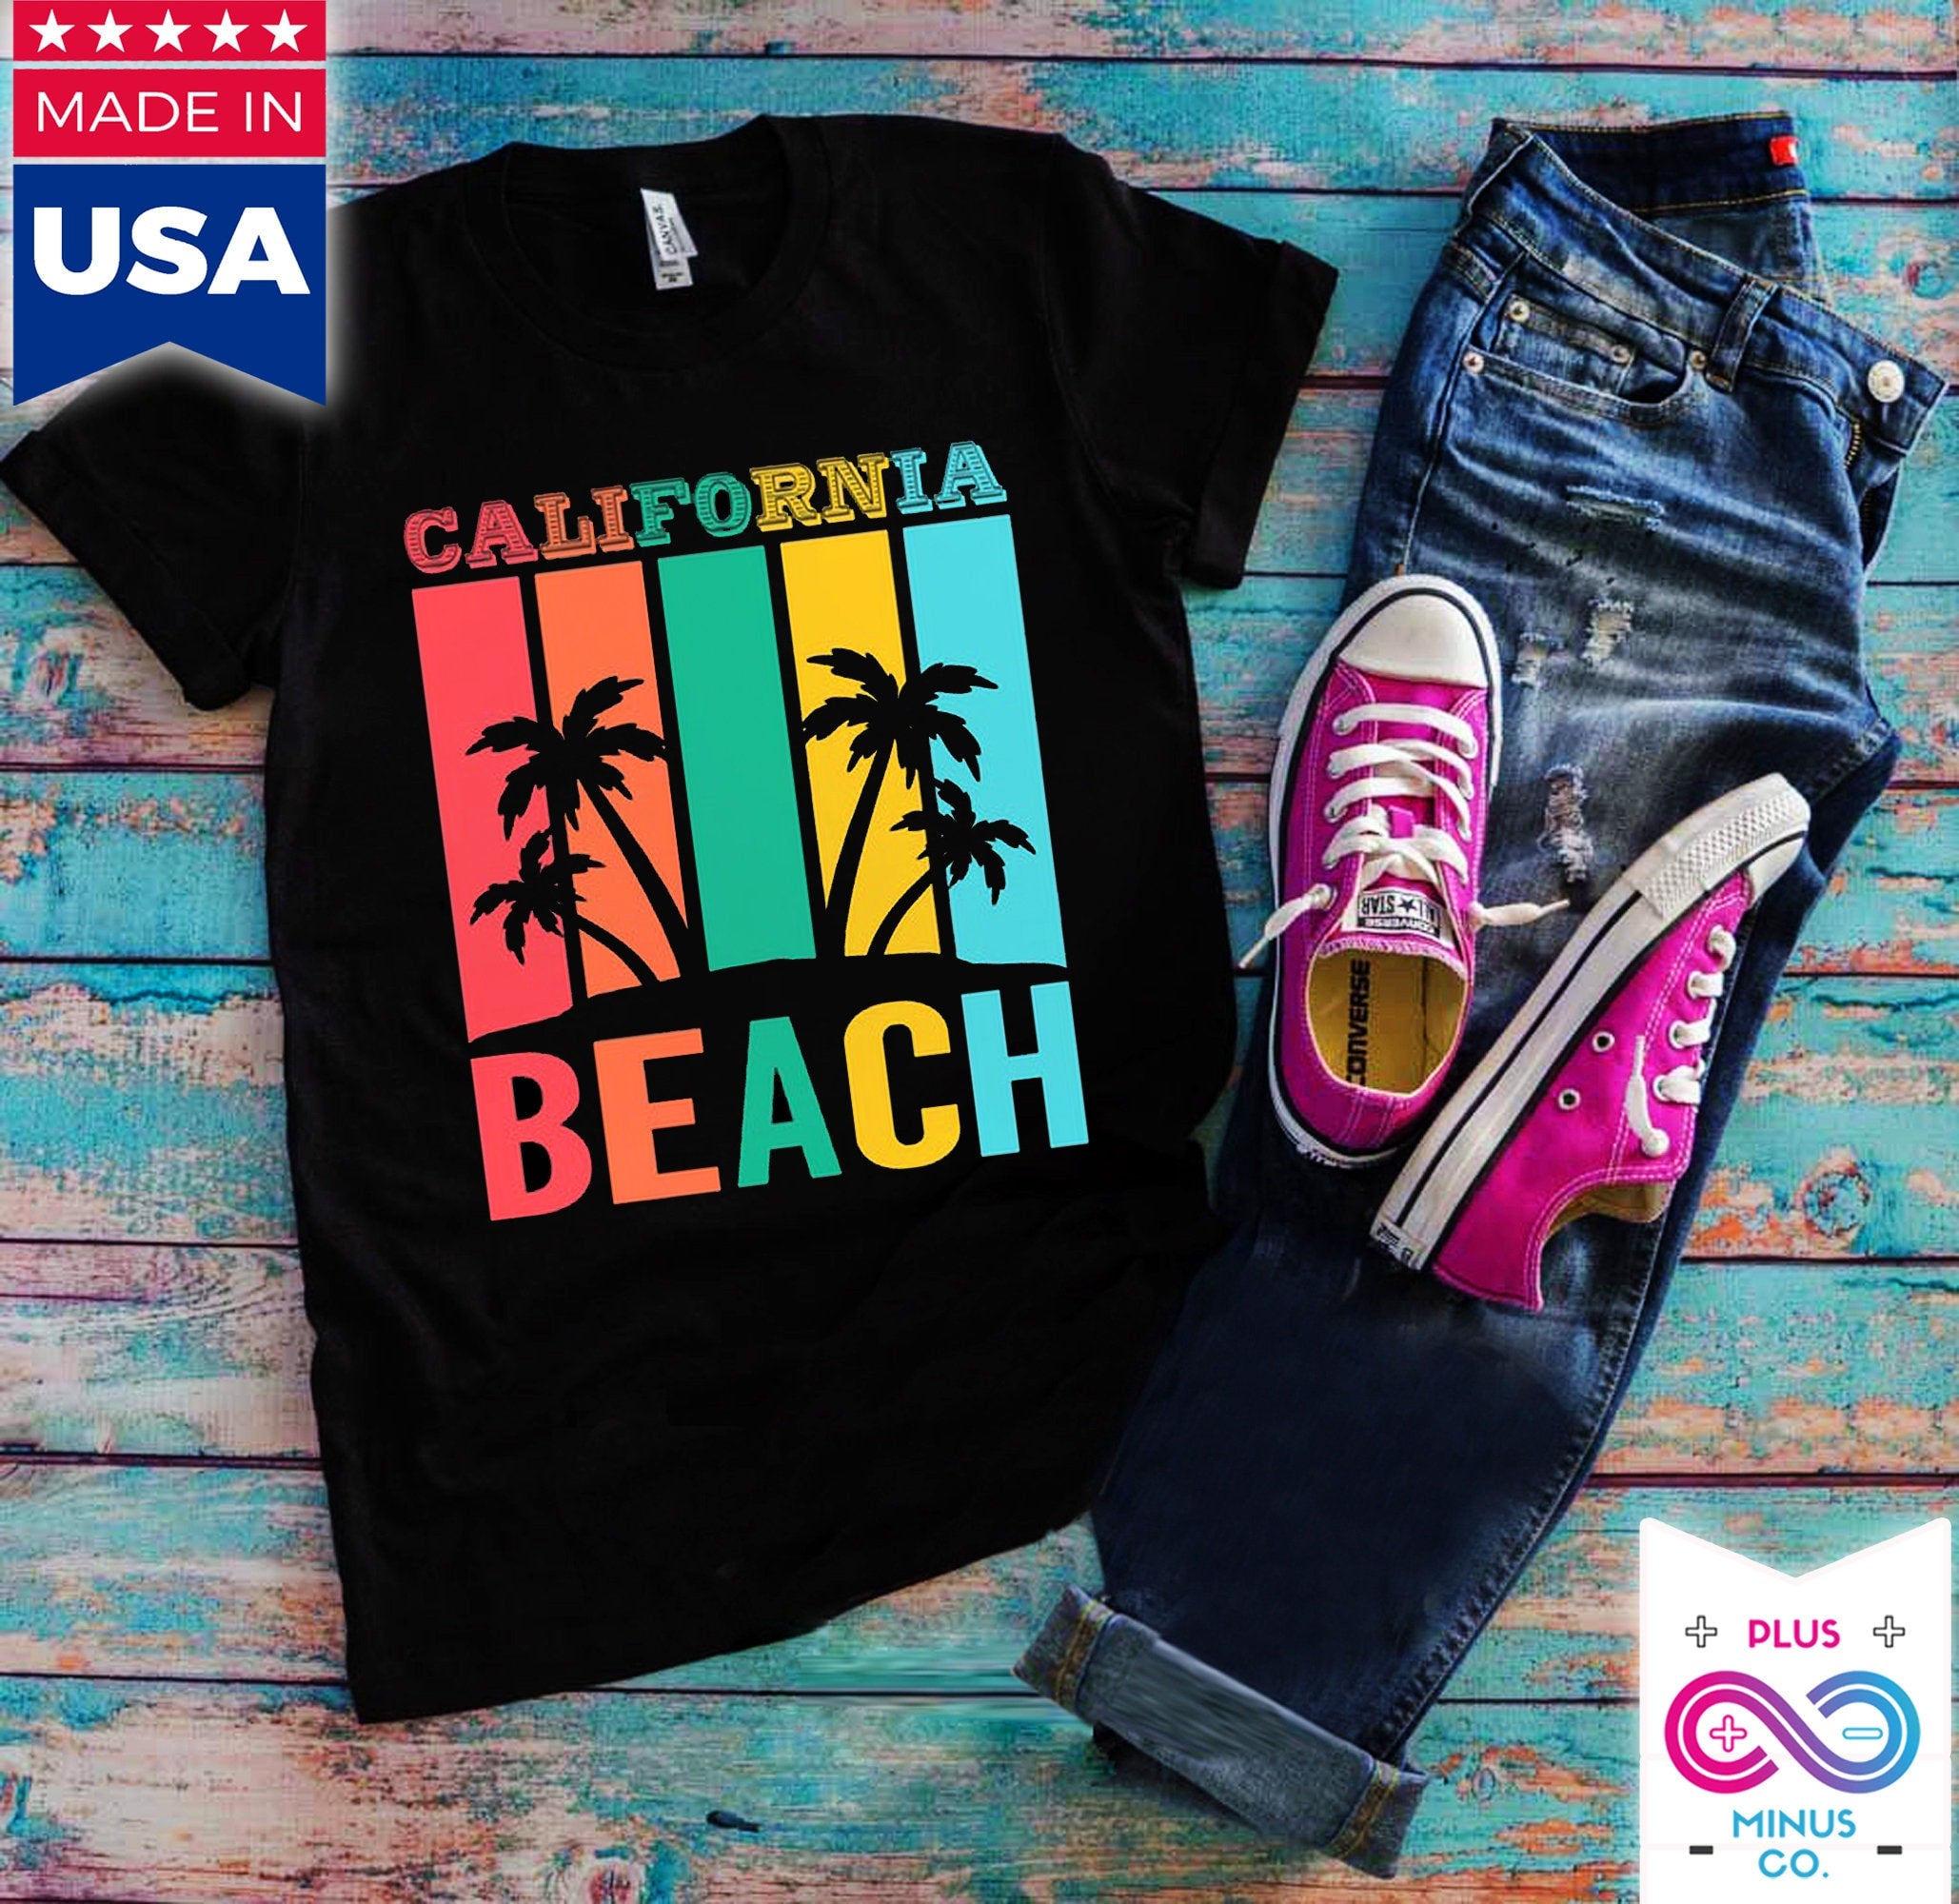 شاطئ كاليفورنيا | تي شيرت ريترو، تي شيرت Island Life | قميص صيفي | قميص العطلة - plusminusco.com